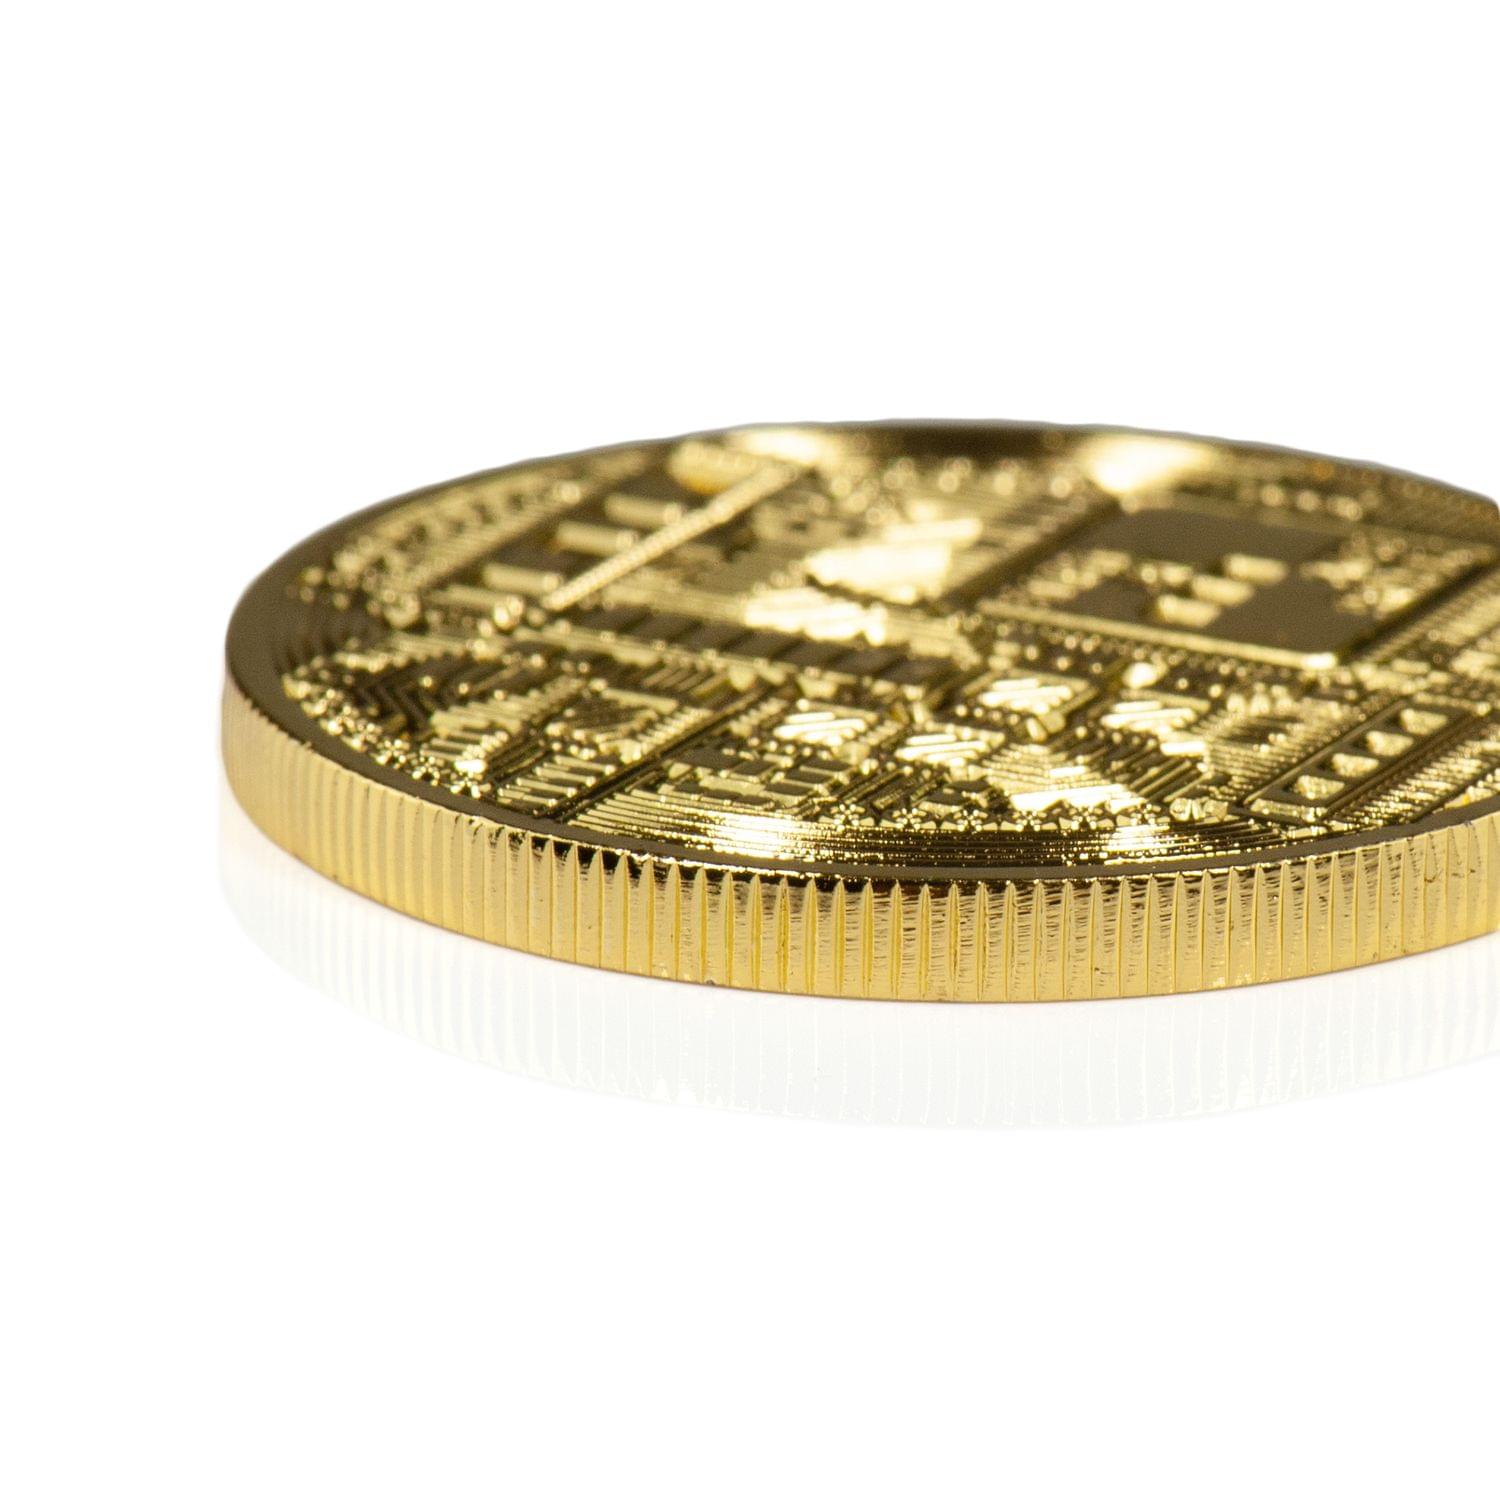 Bitcoin Collectible|Gold Plated Commemorative Blockchain Coin| Collector's Coin